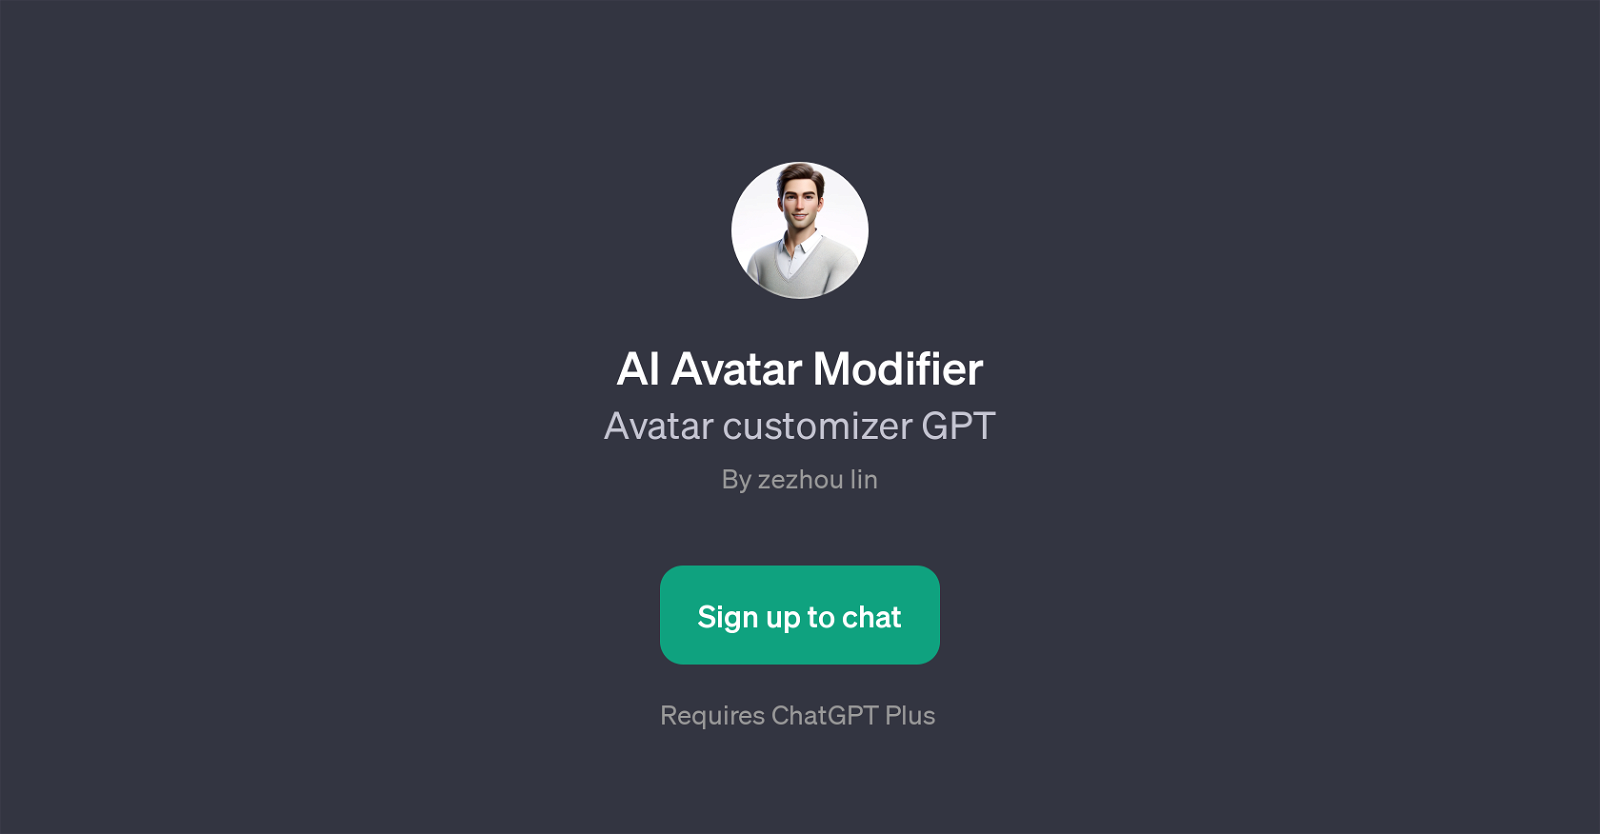 AI Avatar Modifier website